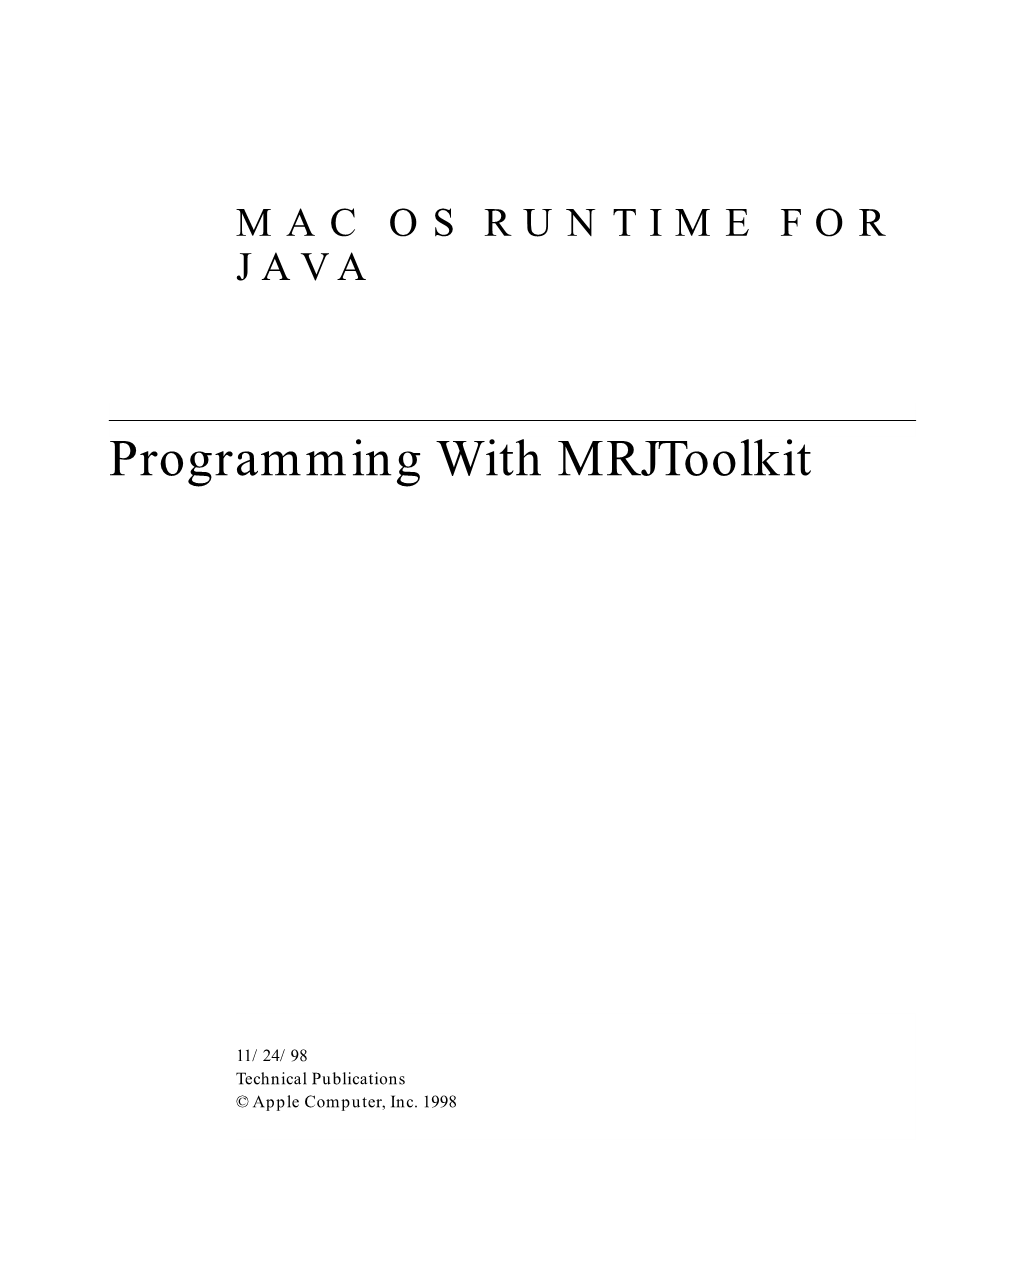 Programming with Mrjtoolkit